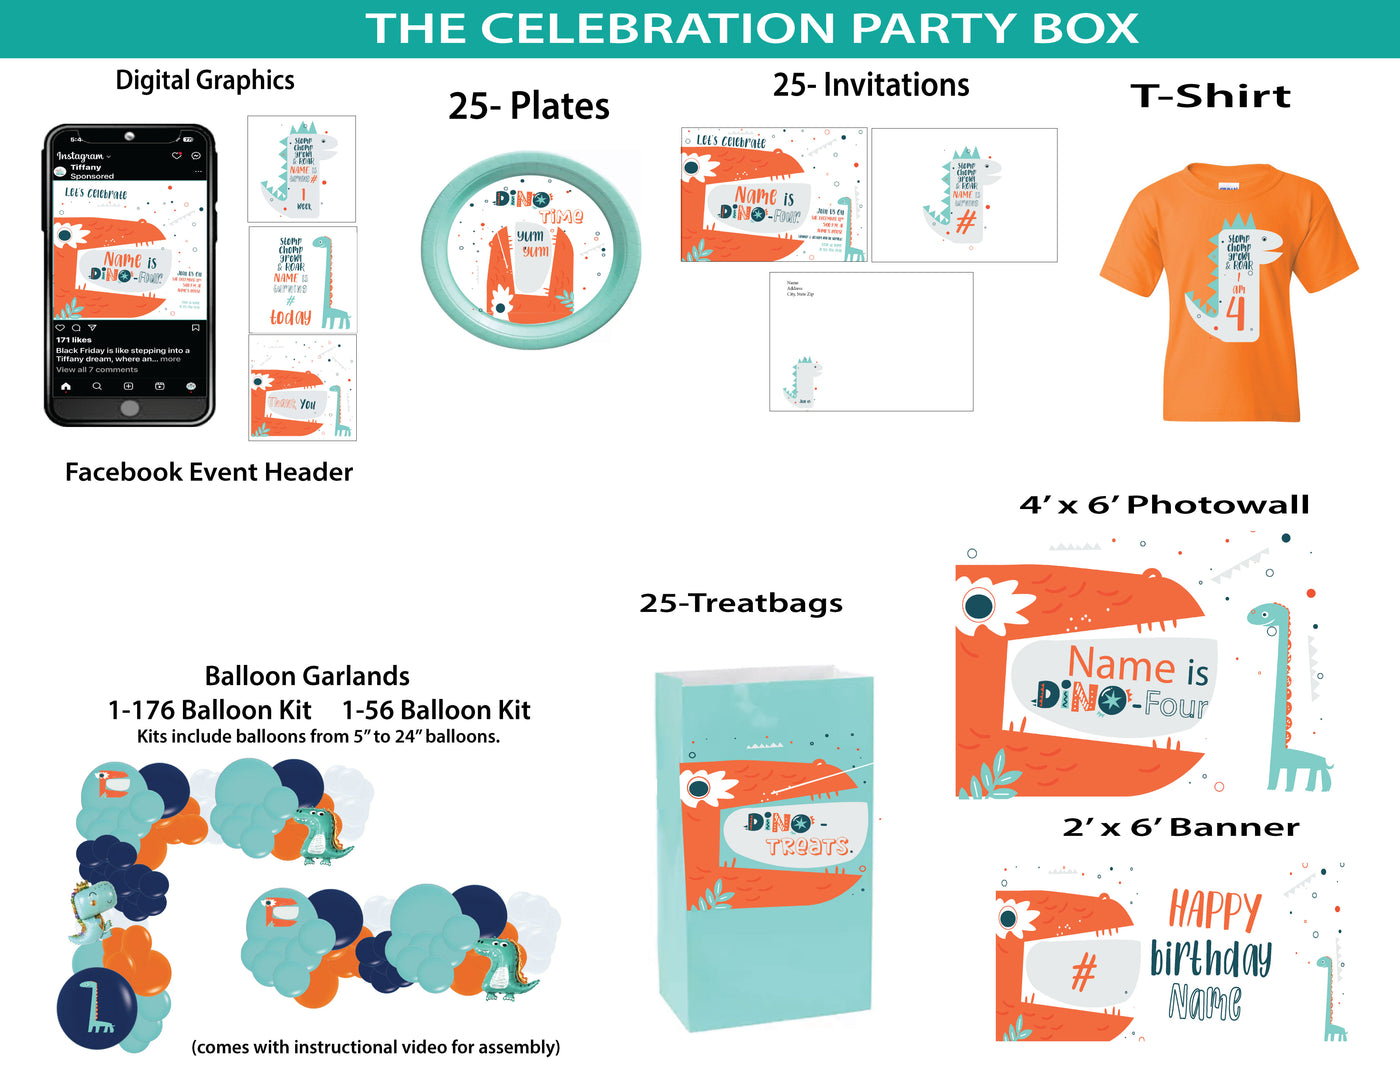 Dino four -Celebration Party Box